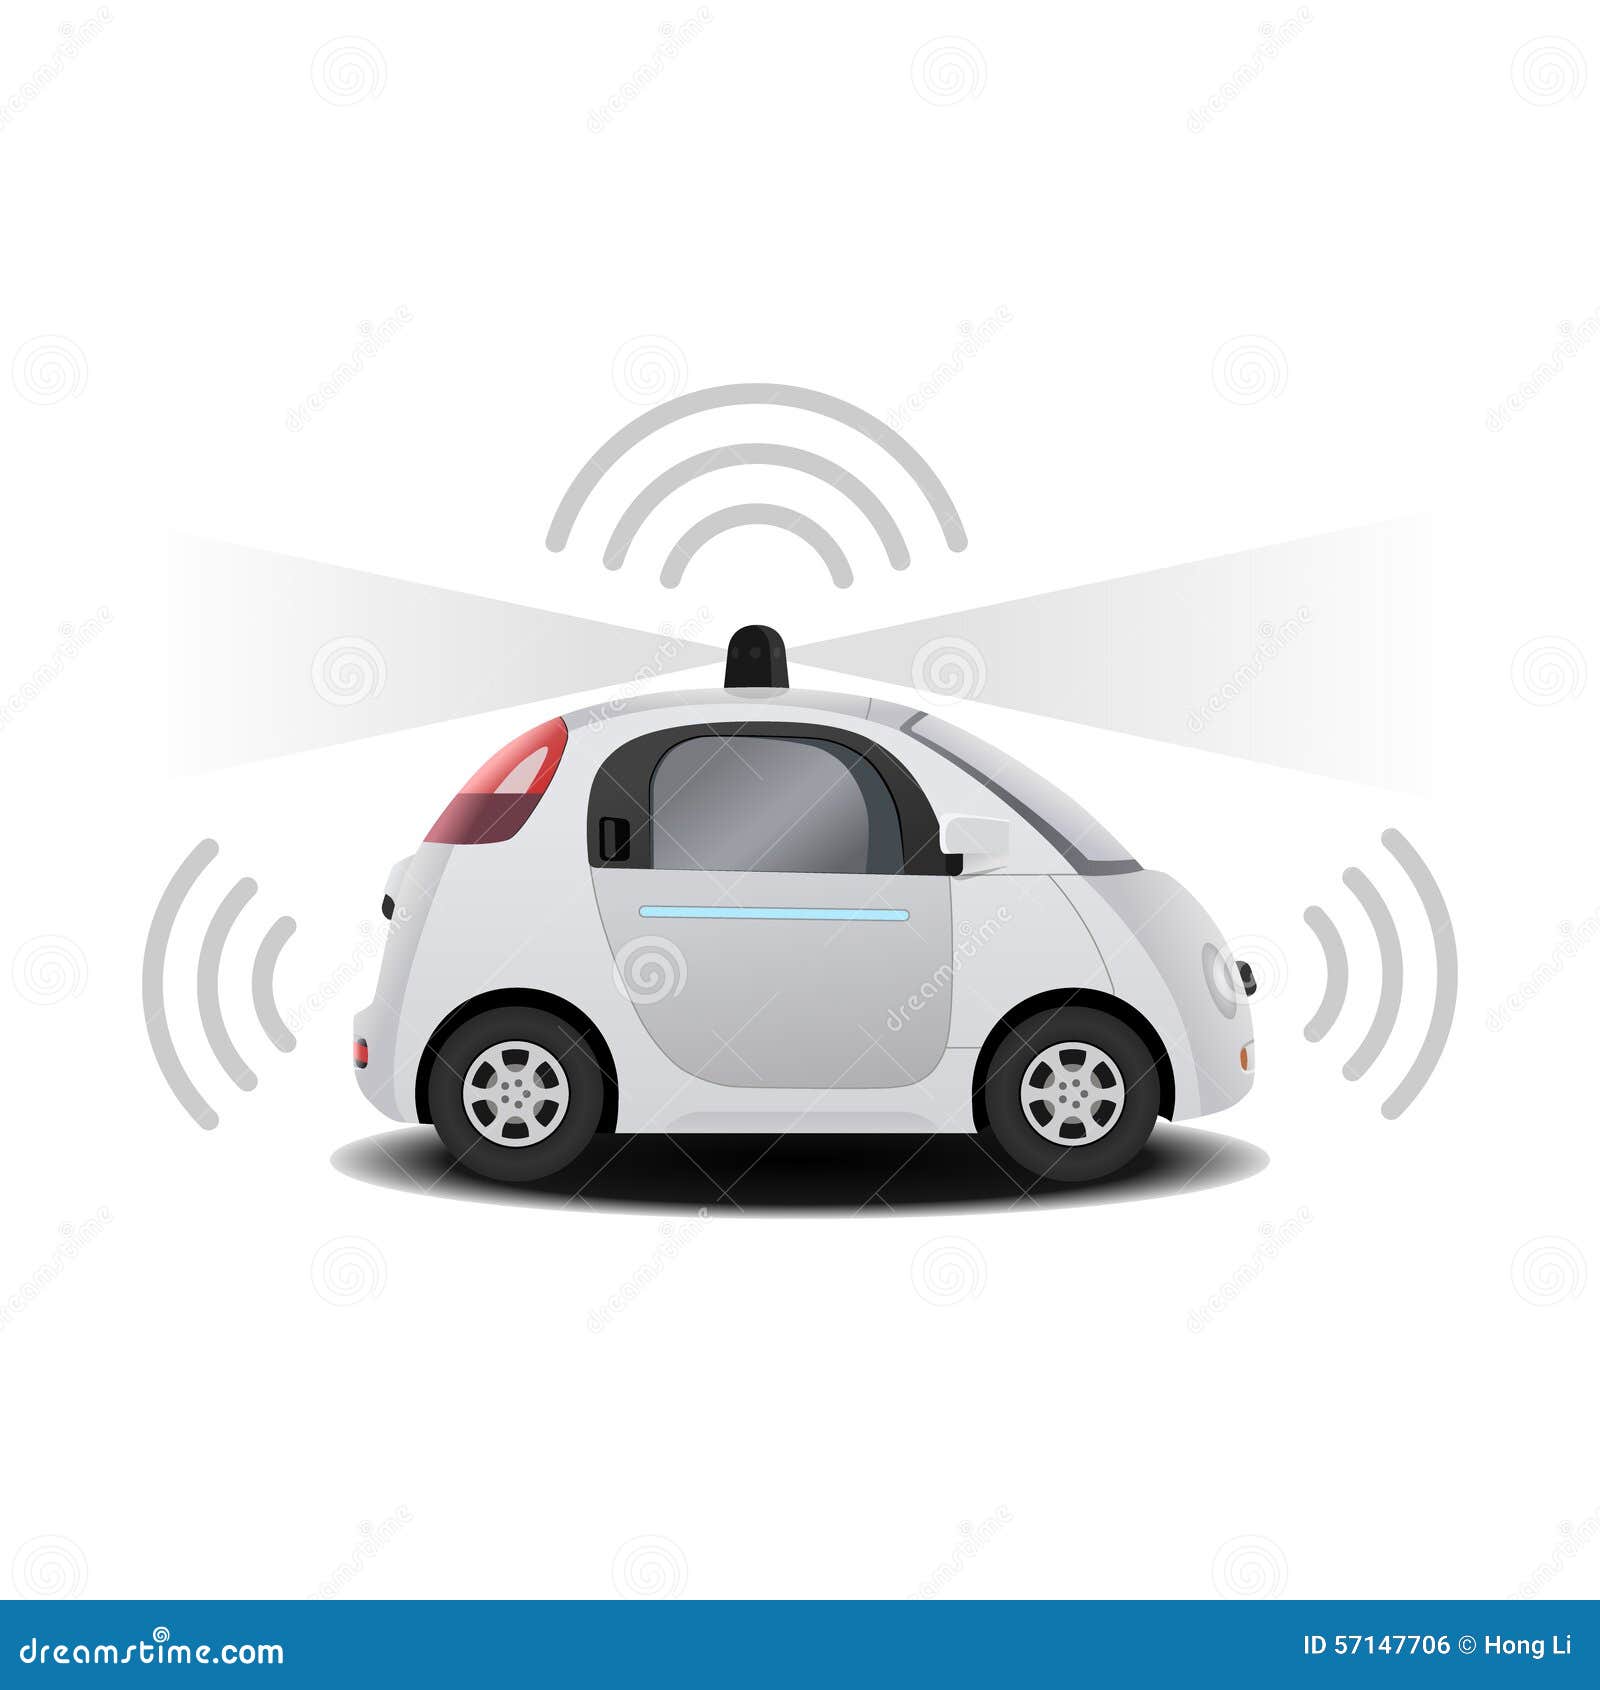 autonomous self-driving (drive) driverless vehicle with radar 3d render